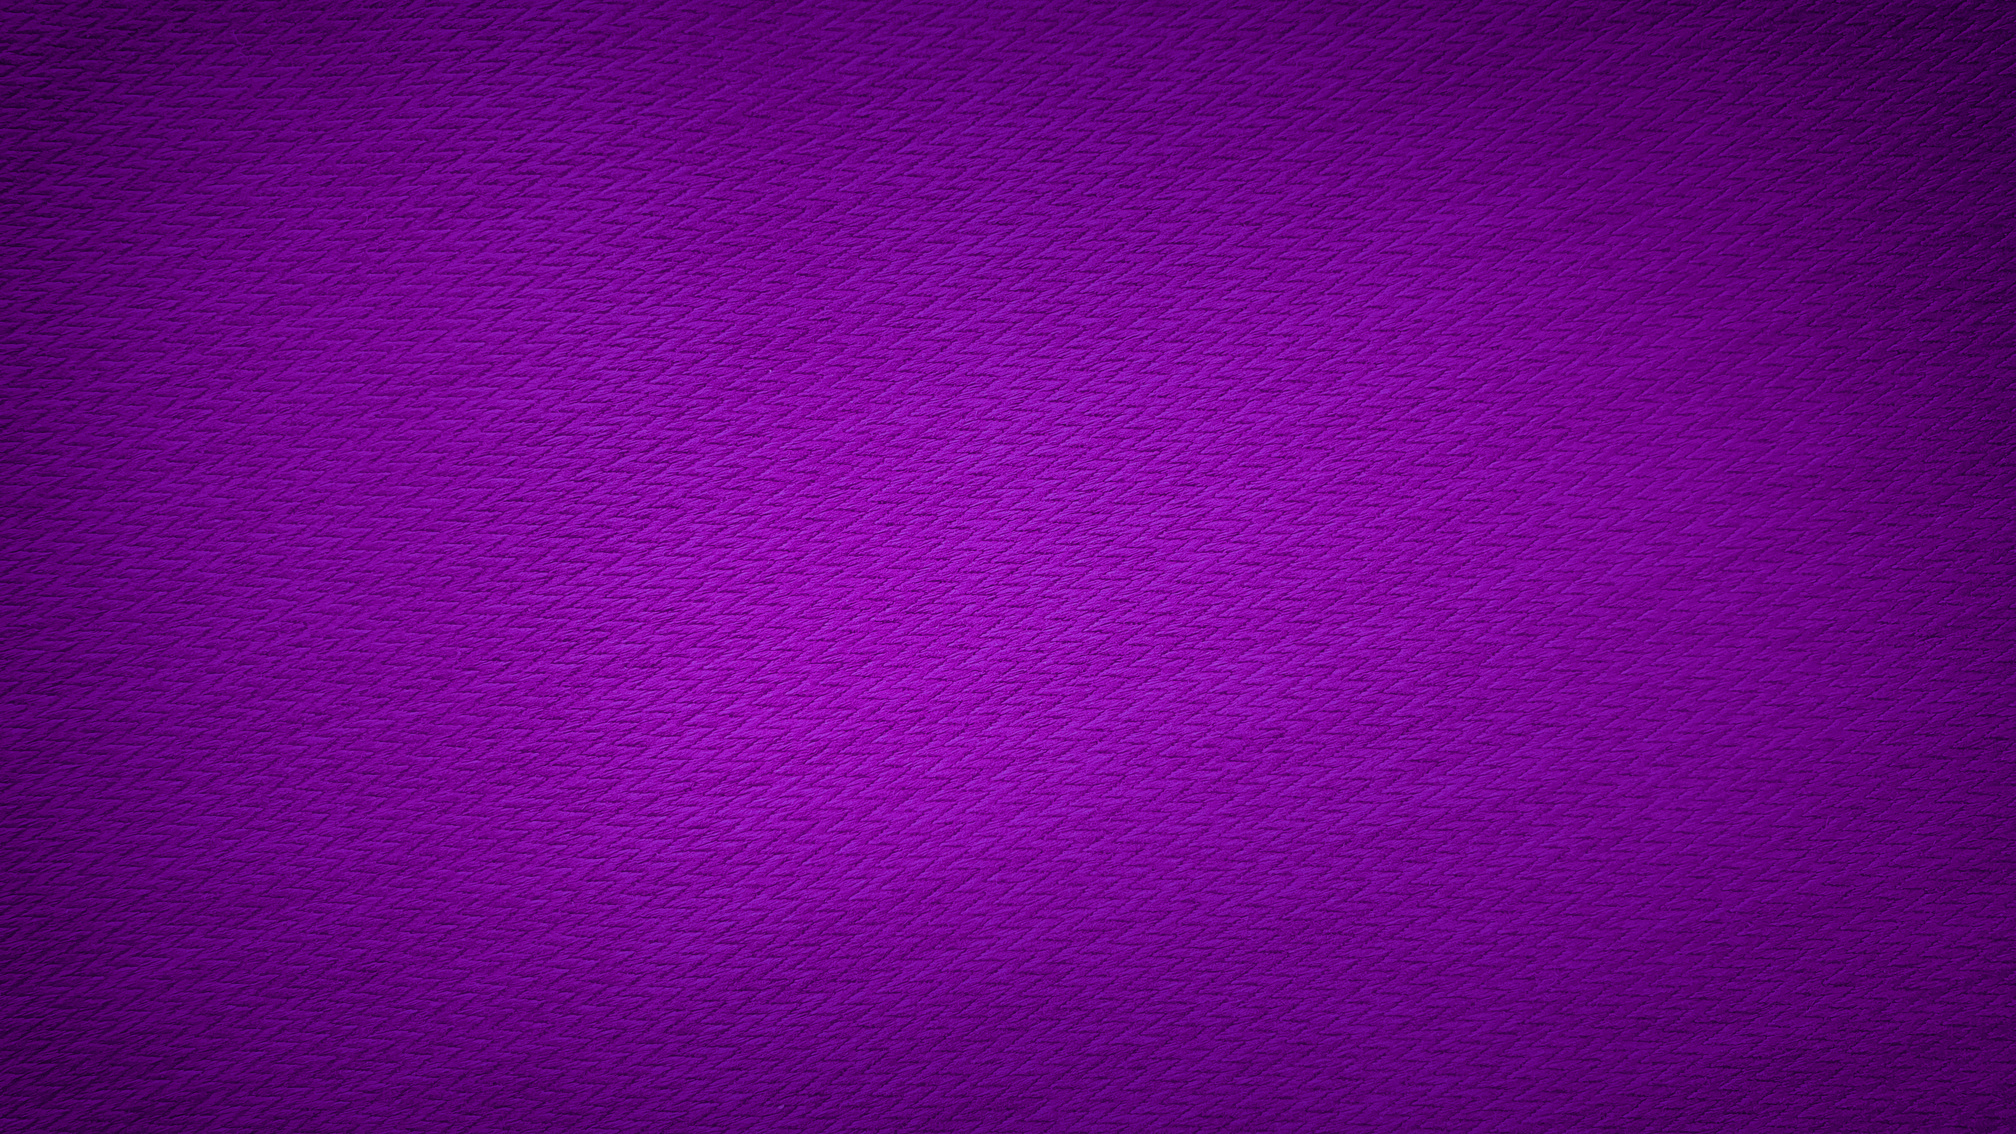 Vignette Gradient Violet Fabric Background